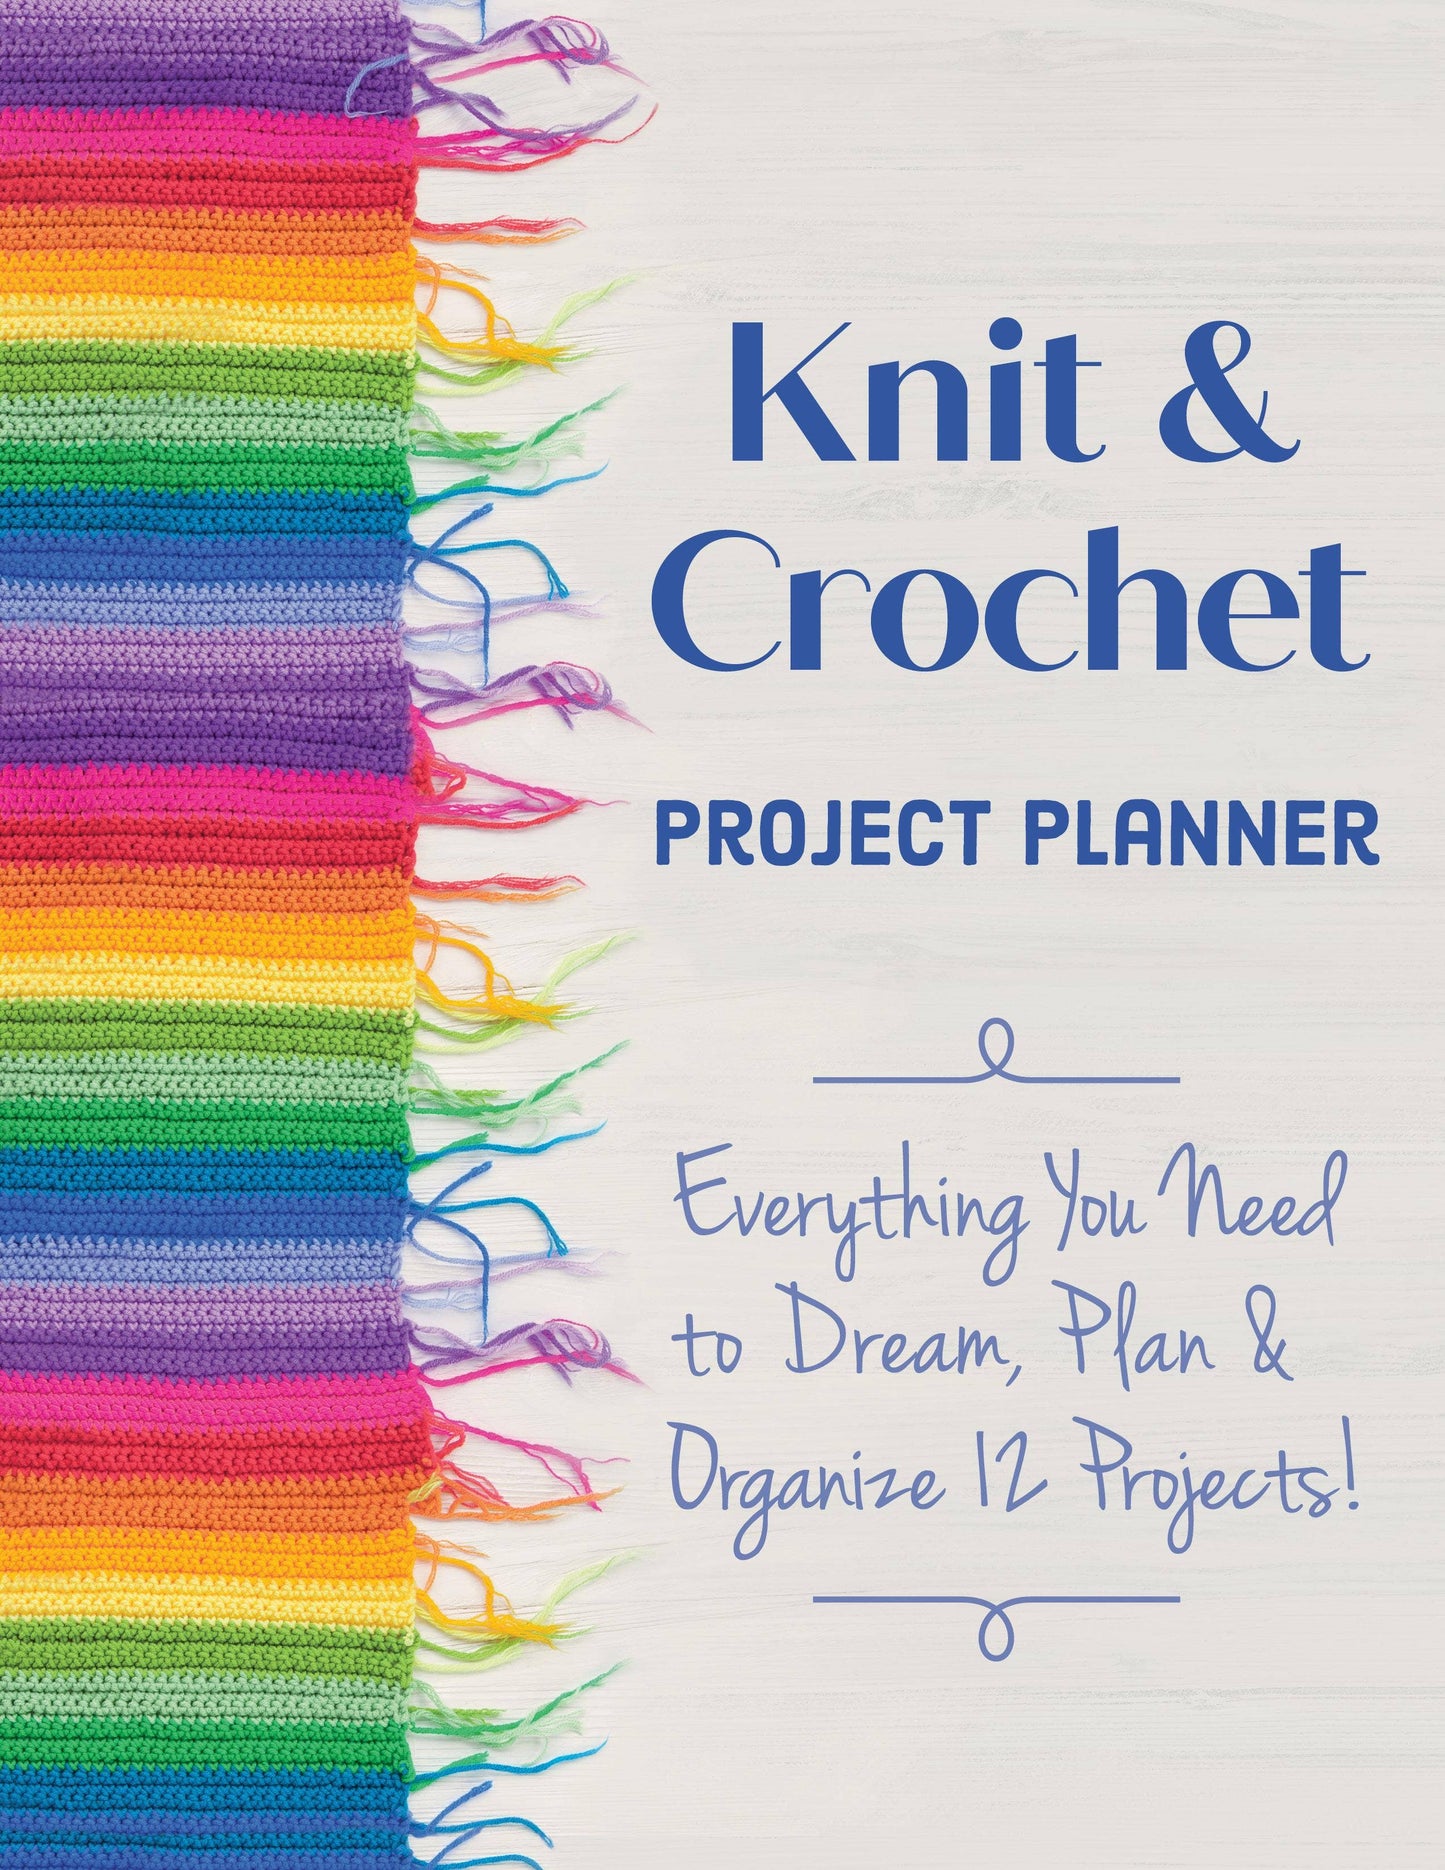 Knit & Crochet Project Planner: Plan & Organize 12 Projects!